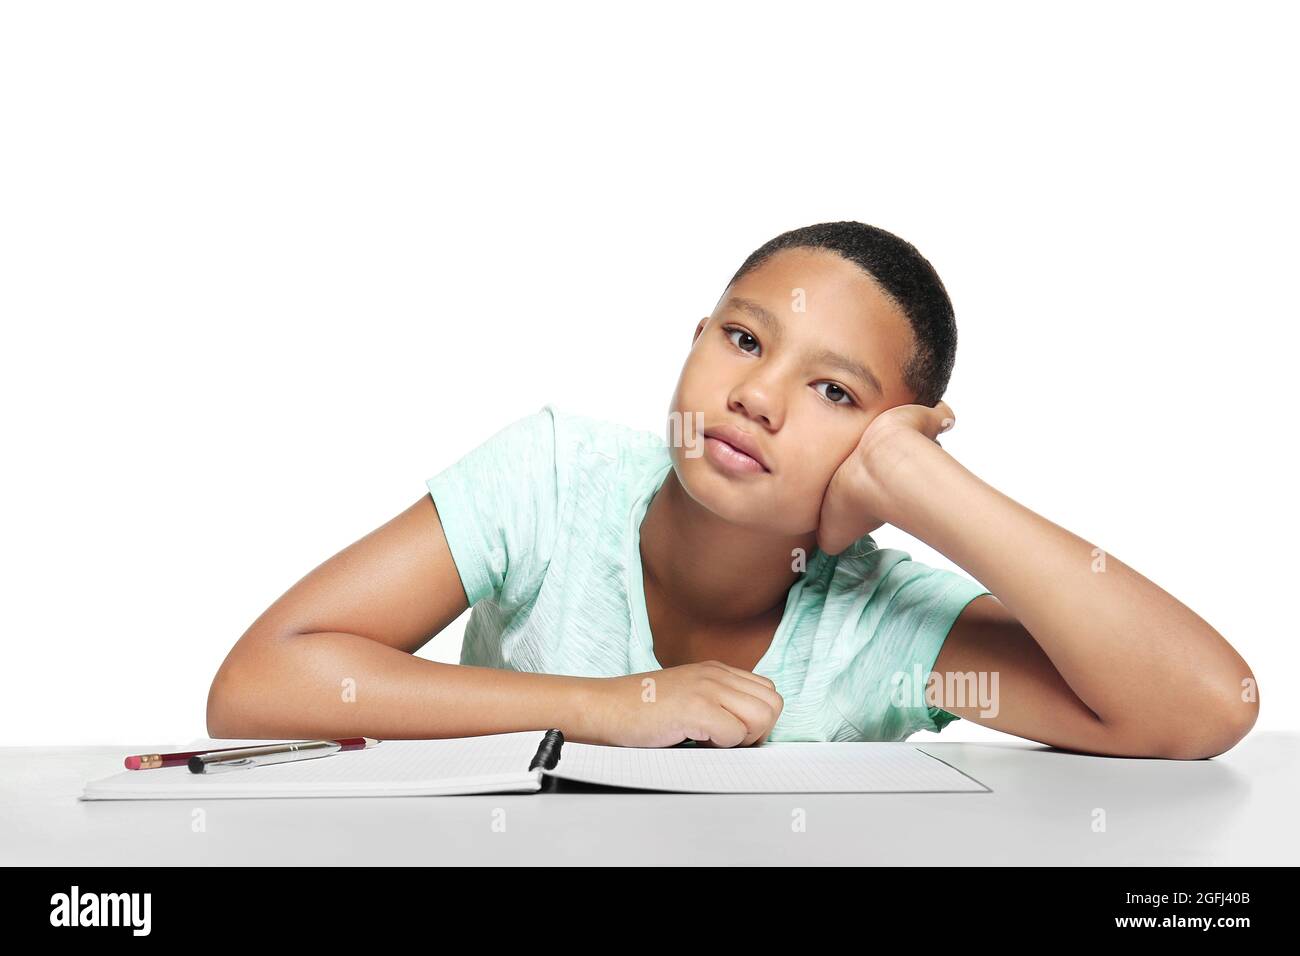 African American boy making homework on light background Stock Photo